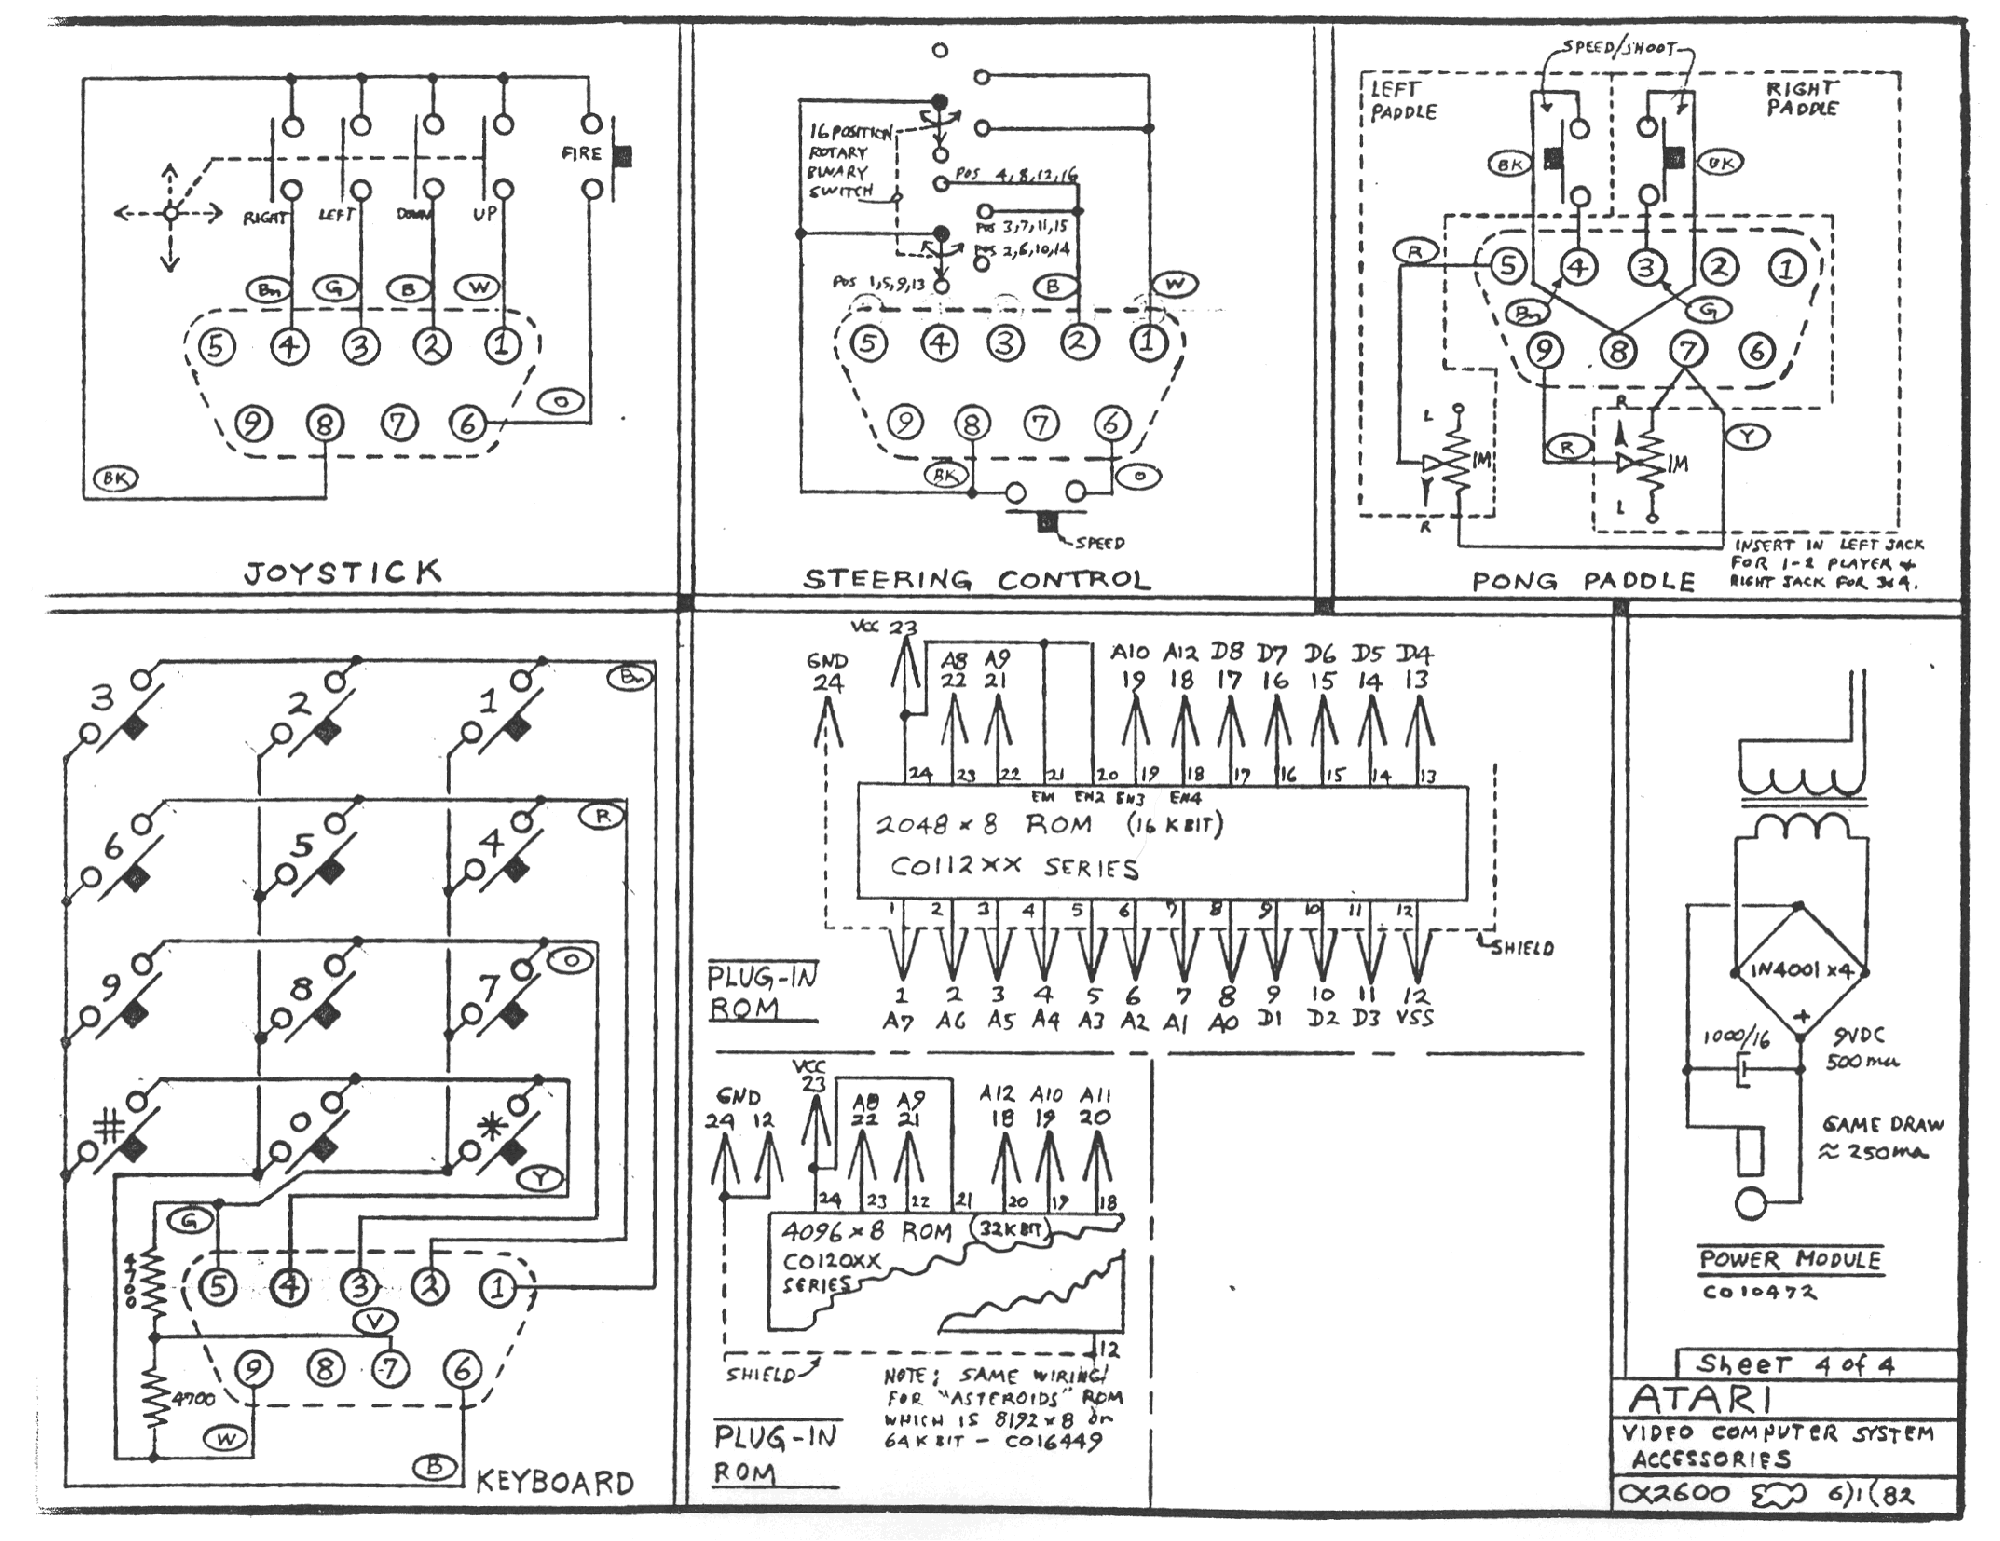 Atari 2600 Accessories Schematic